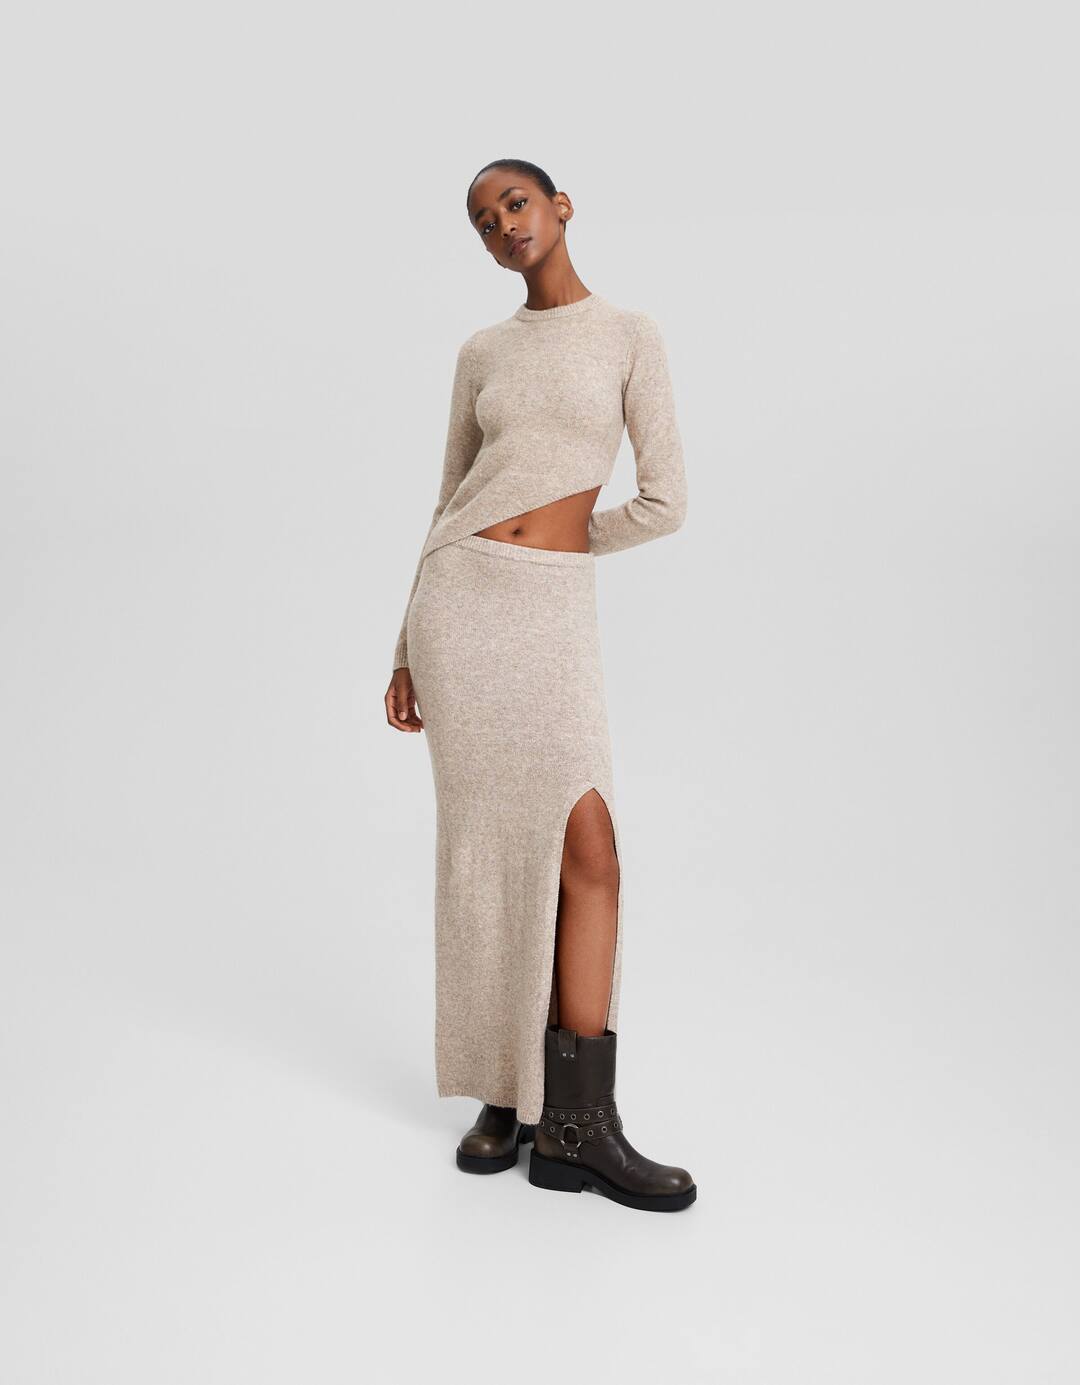 Knit midi skirt with a slit